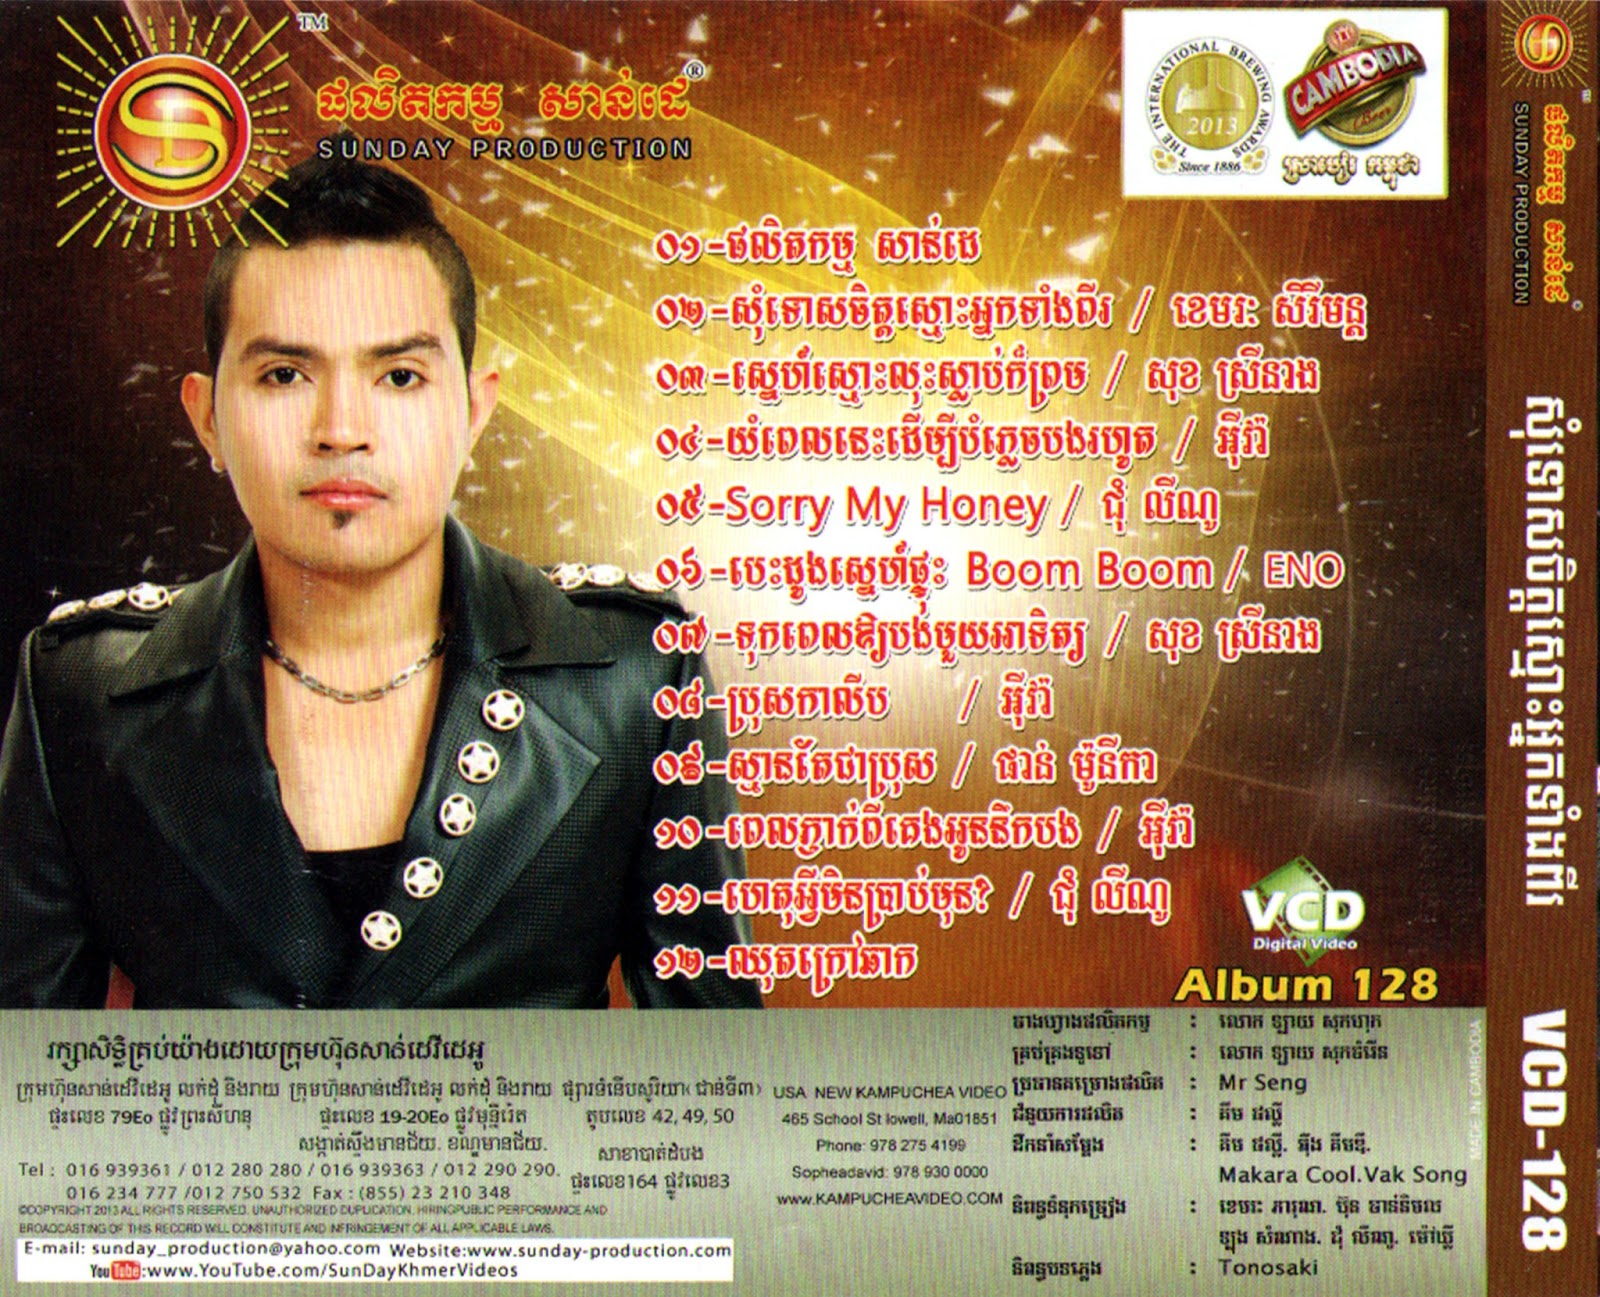 SD VCD VOL 128 សុំទោសចិត្តស្មោះអ្នកទាំងពីរ | khmer2best